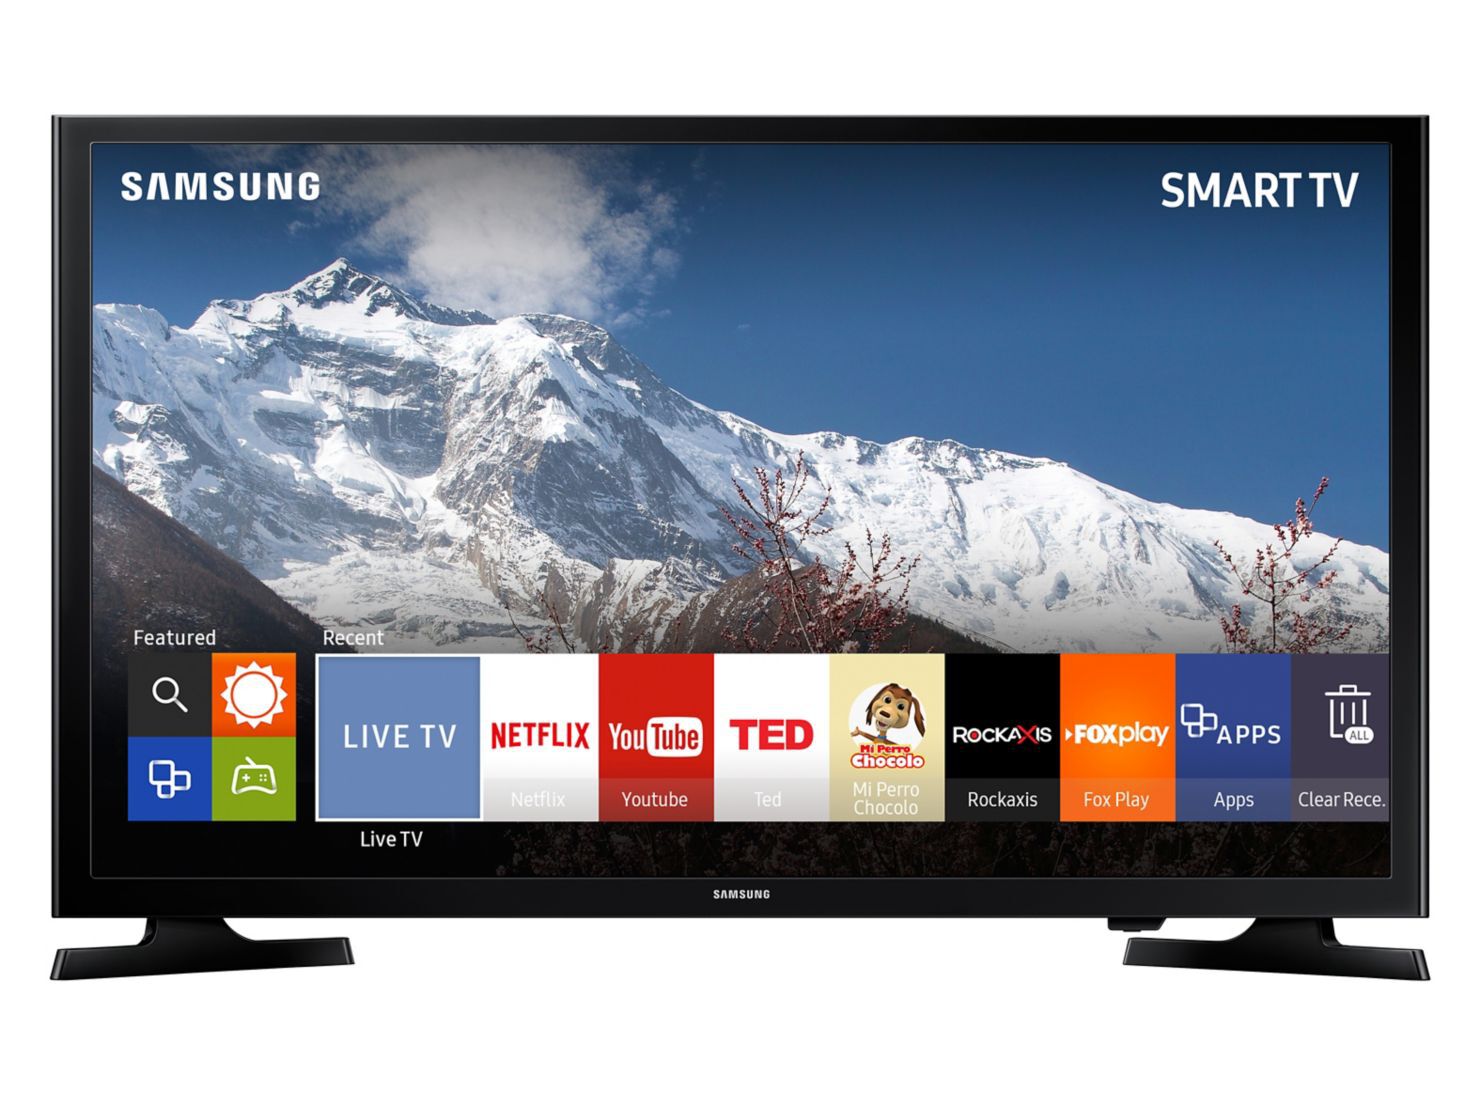 Samsung Smart TV 32. Самсунг лед 40 смарт ТВ. Samsung Smart TV 43. Телевизор самсунг 32 дюйма смарт ТВ.